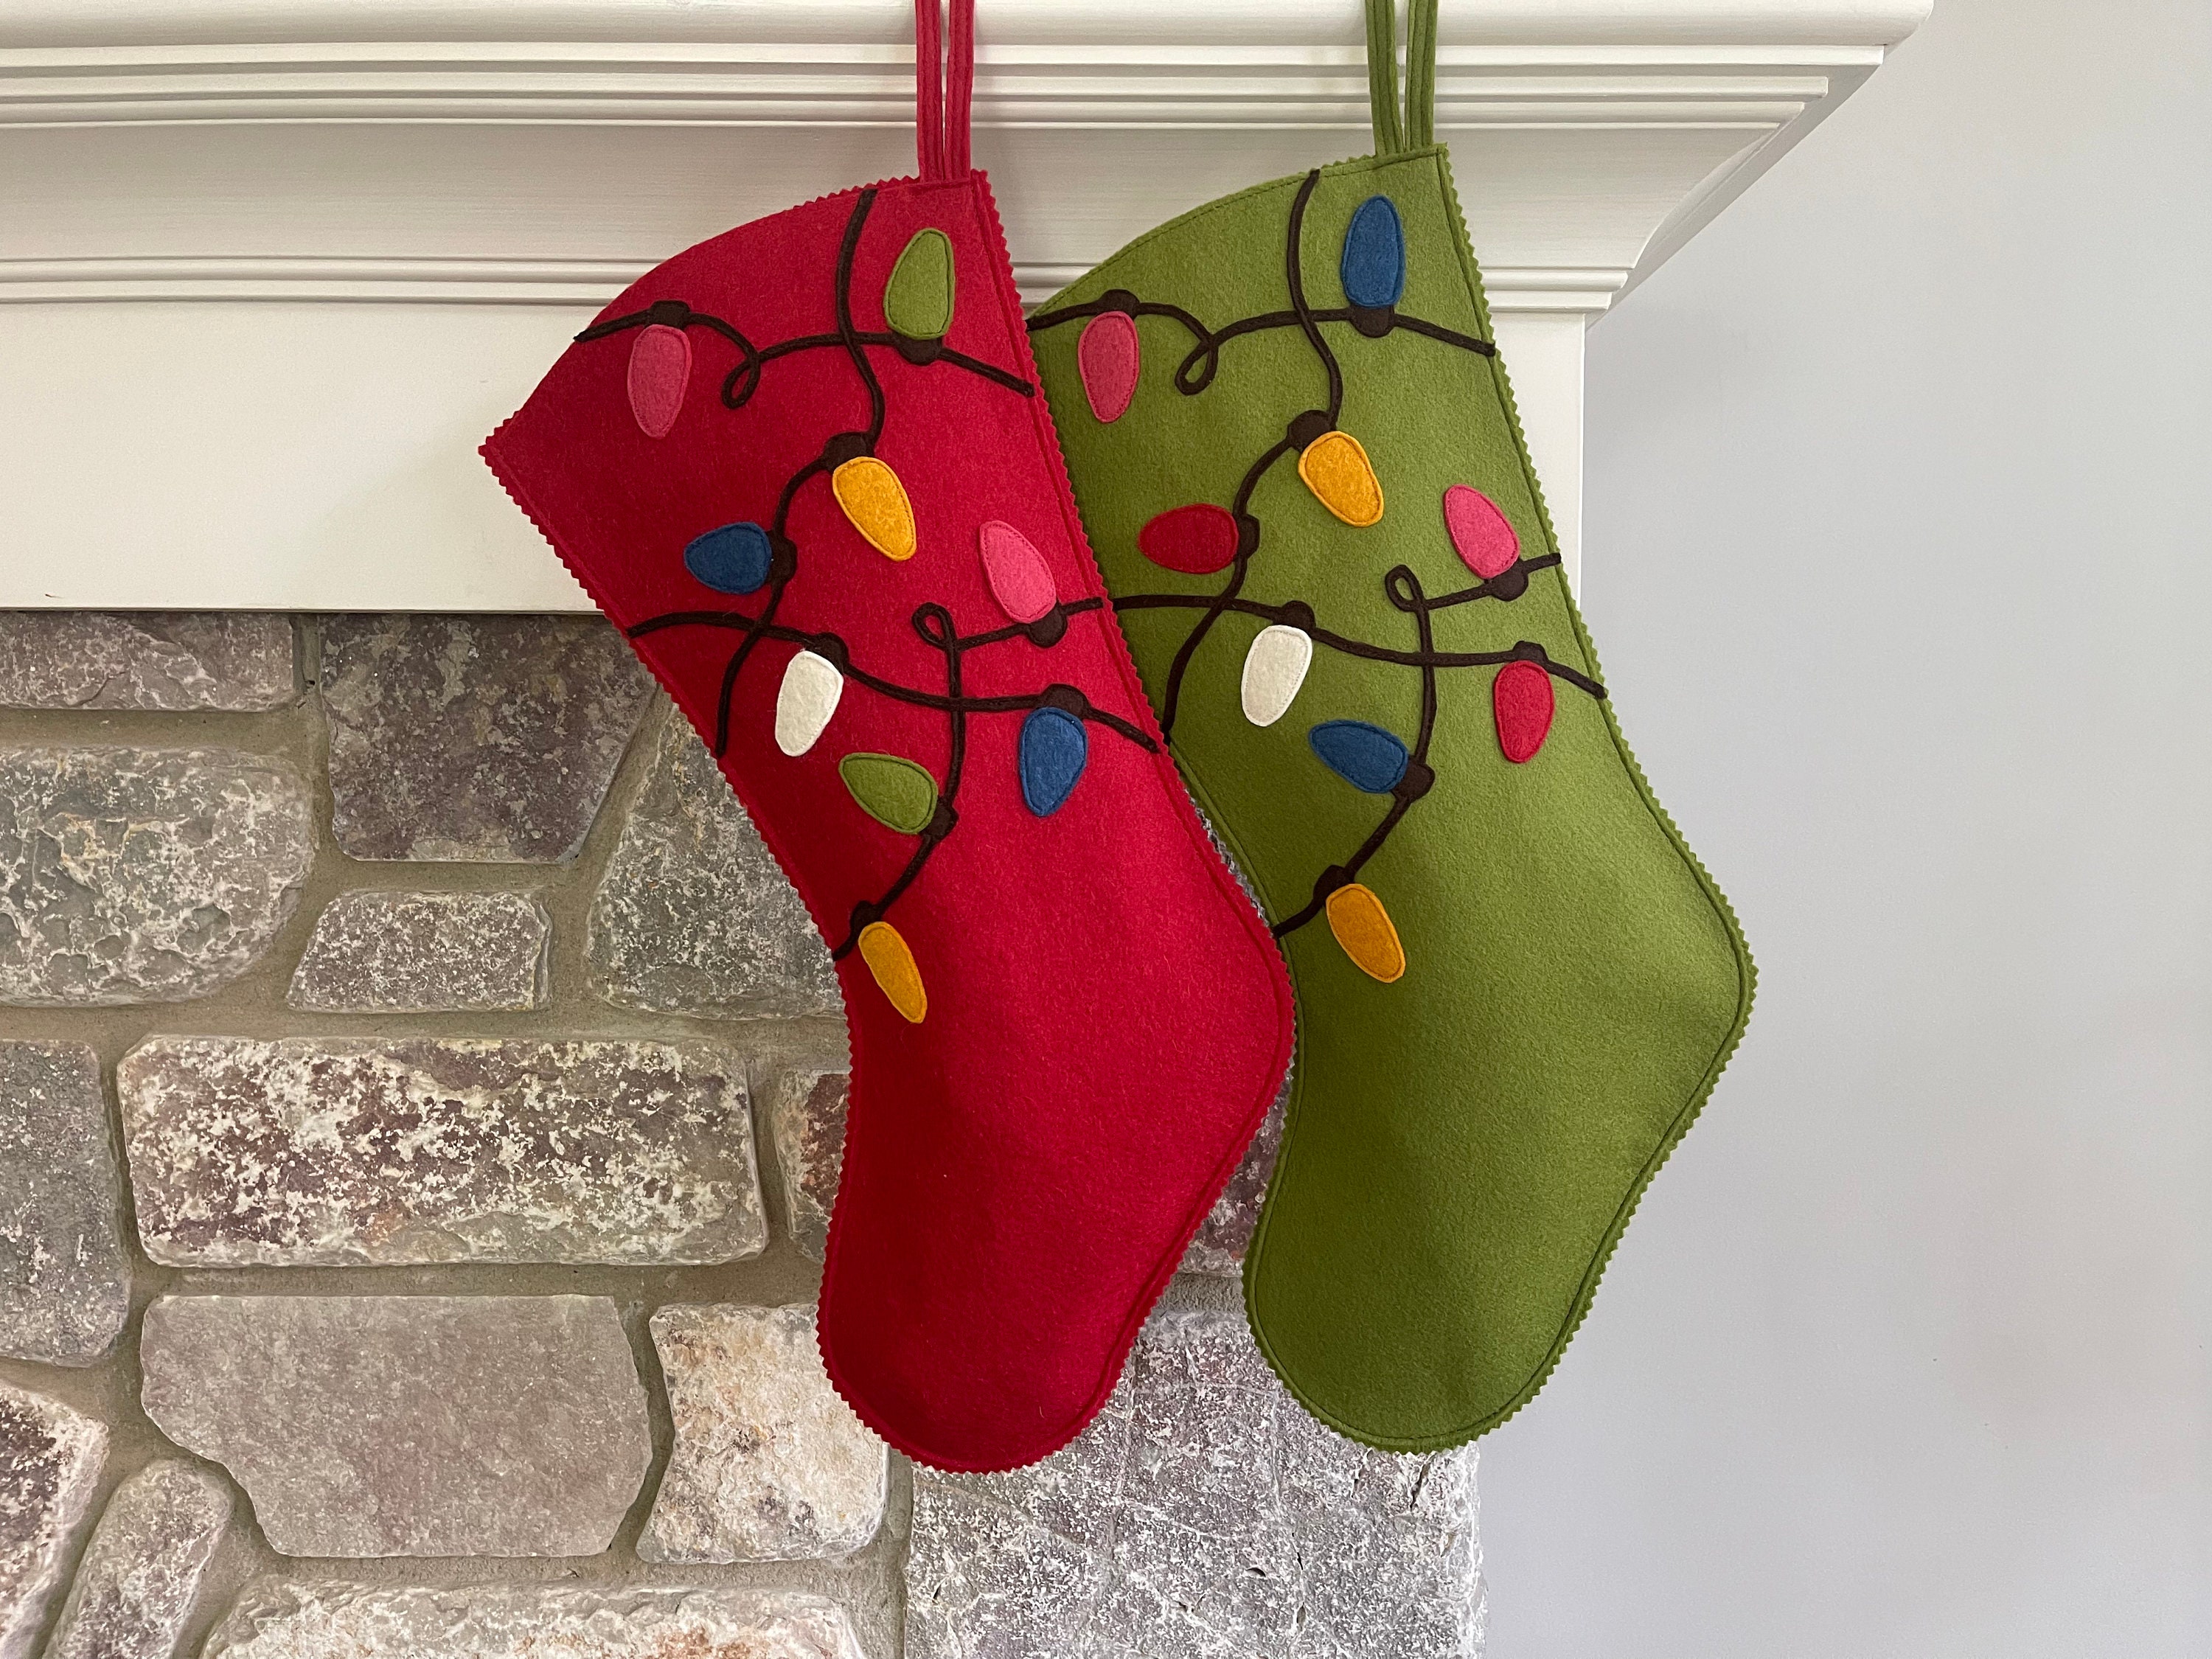 Wool Felt Christmas Stockings: Festive Elegance - Woollyfelt